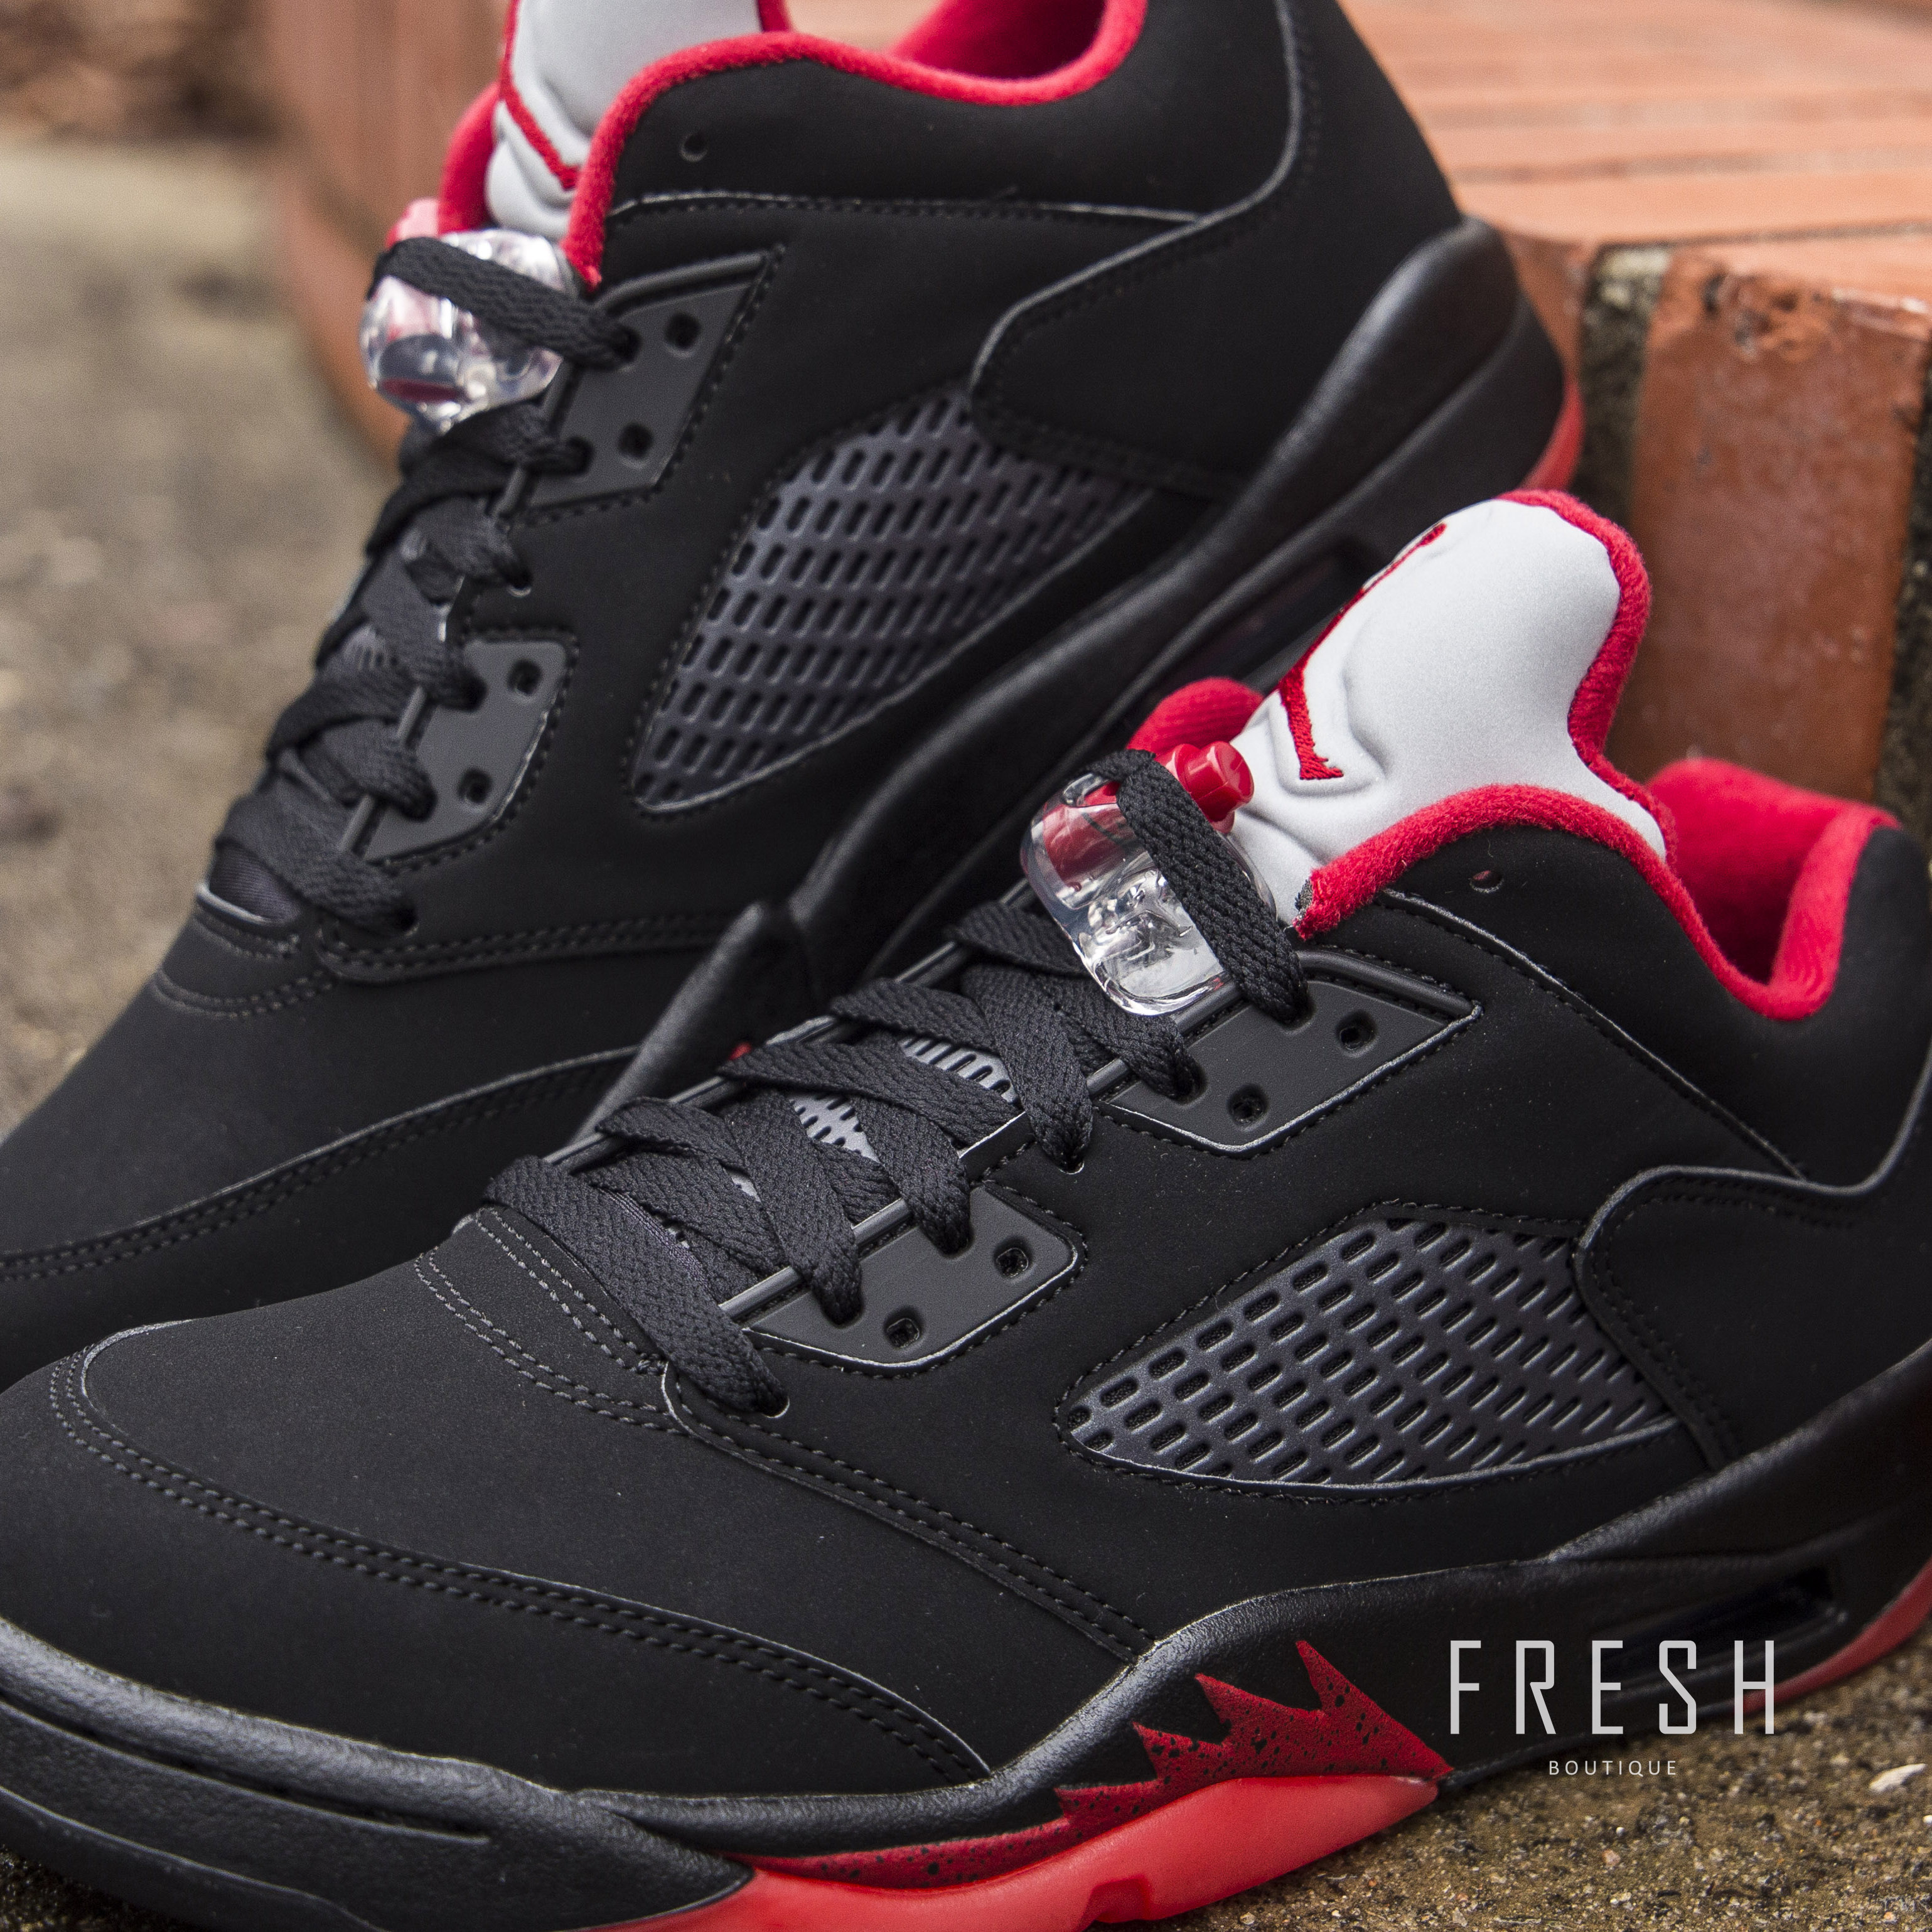 Air Jordan 5 Retro Low – Black/Gym Red – Fresh Sneaker Boutique